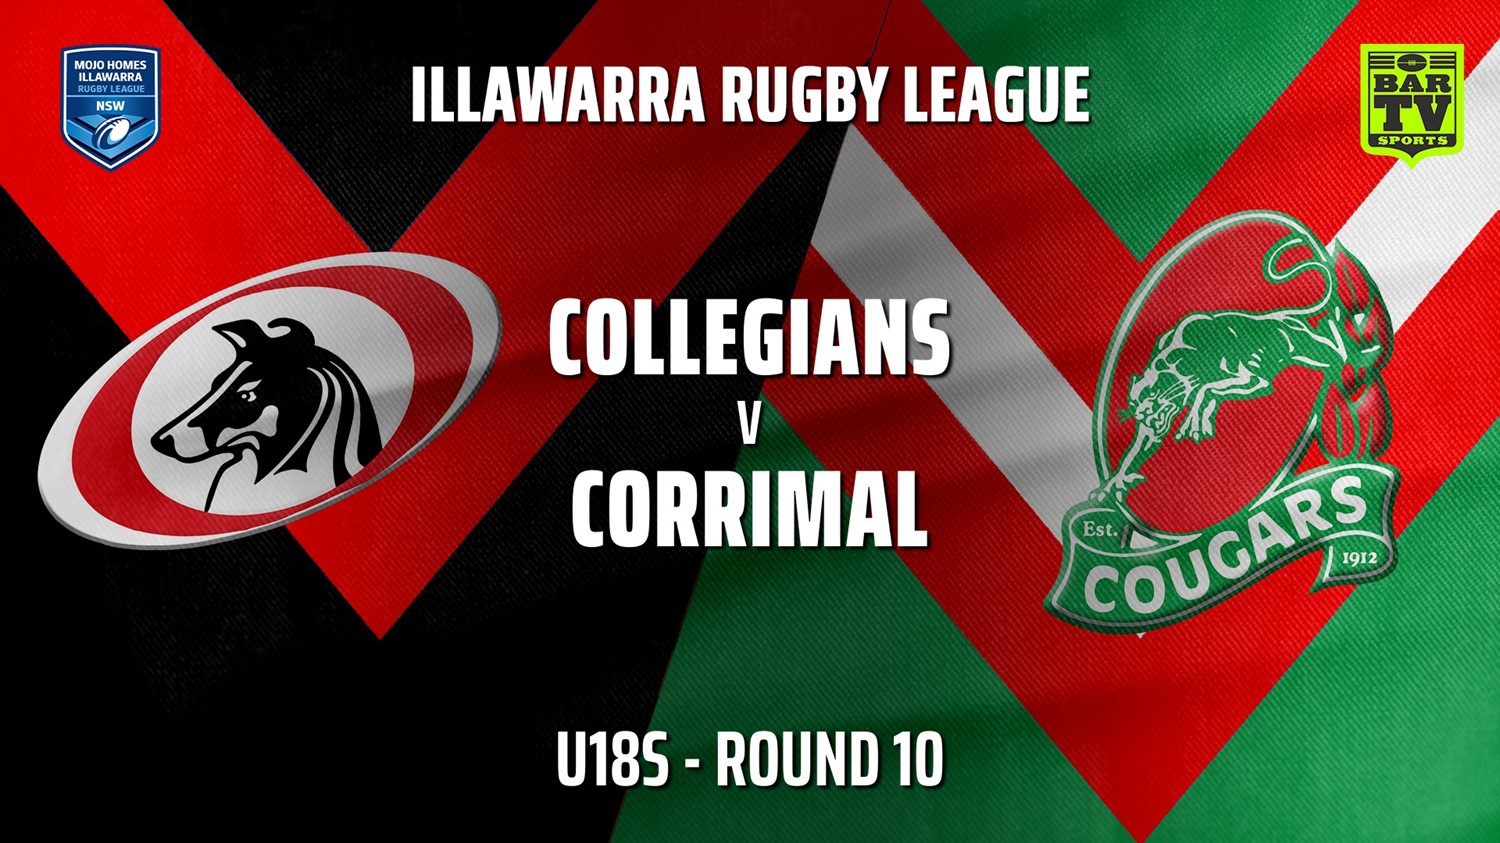 210626-Illawarra Round 10 - U18s - Collegians v Corrimal Cougars Slate Image